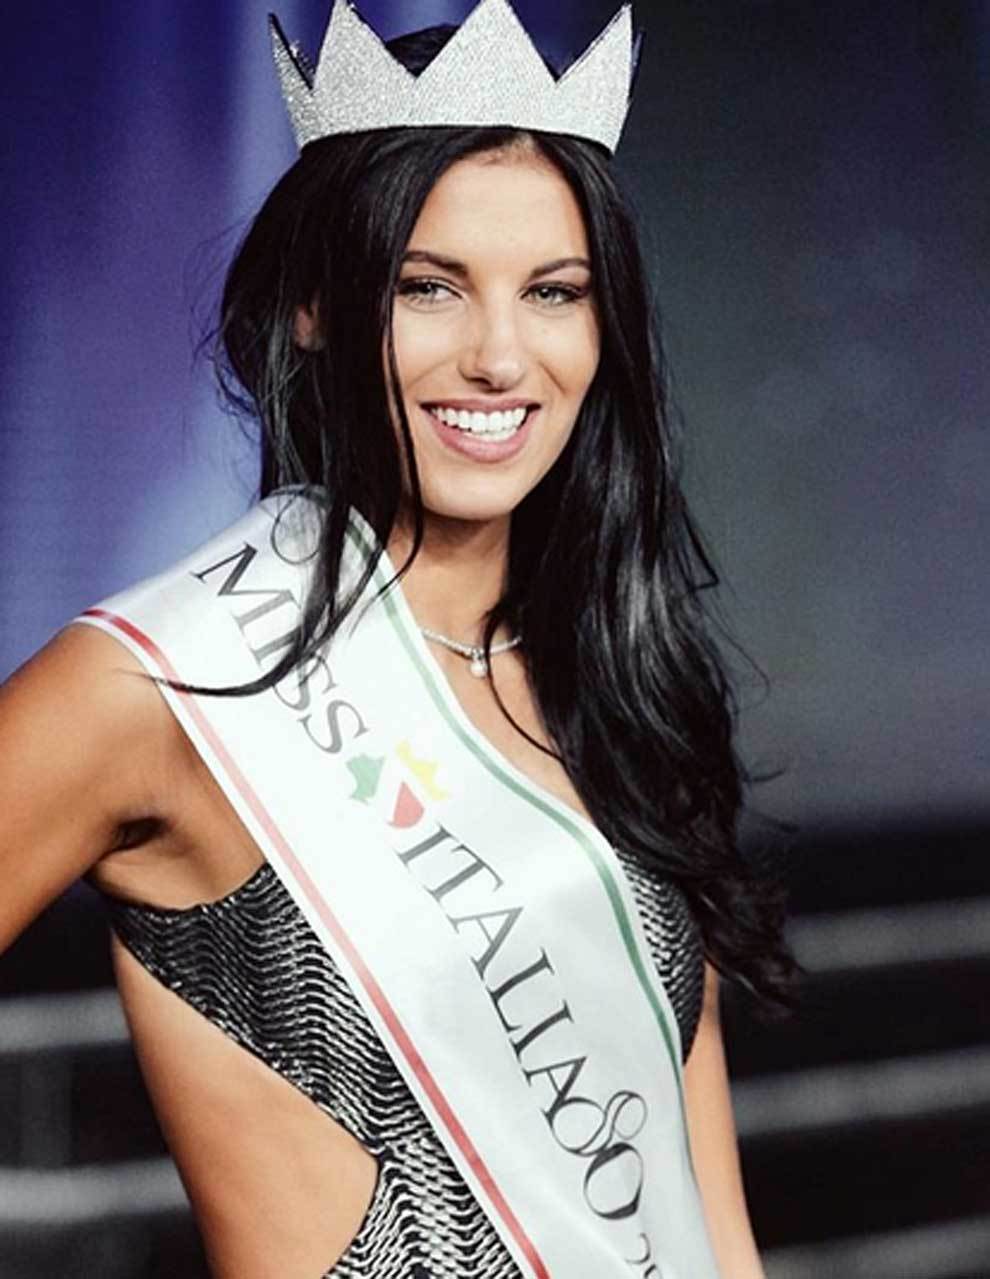 Photos: Carolina Stramare is crowned Miss Italy 2019 - Foto 2 de 11 | MARCA  English